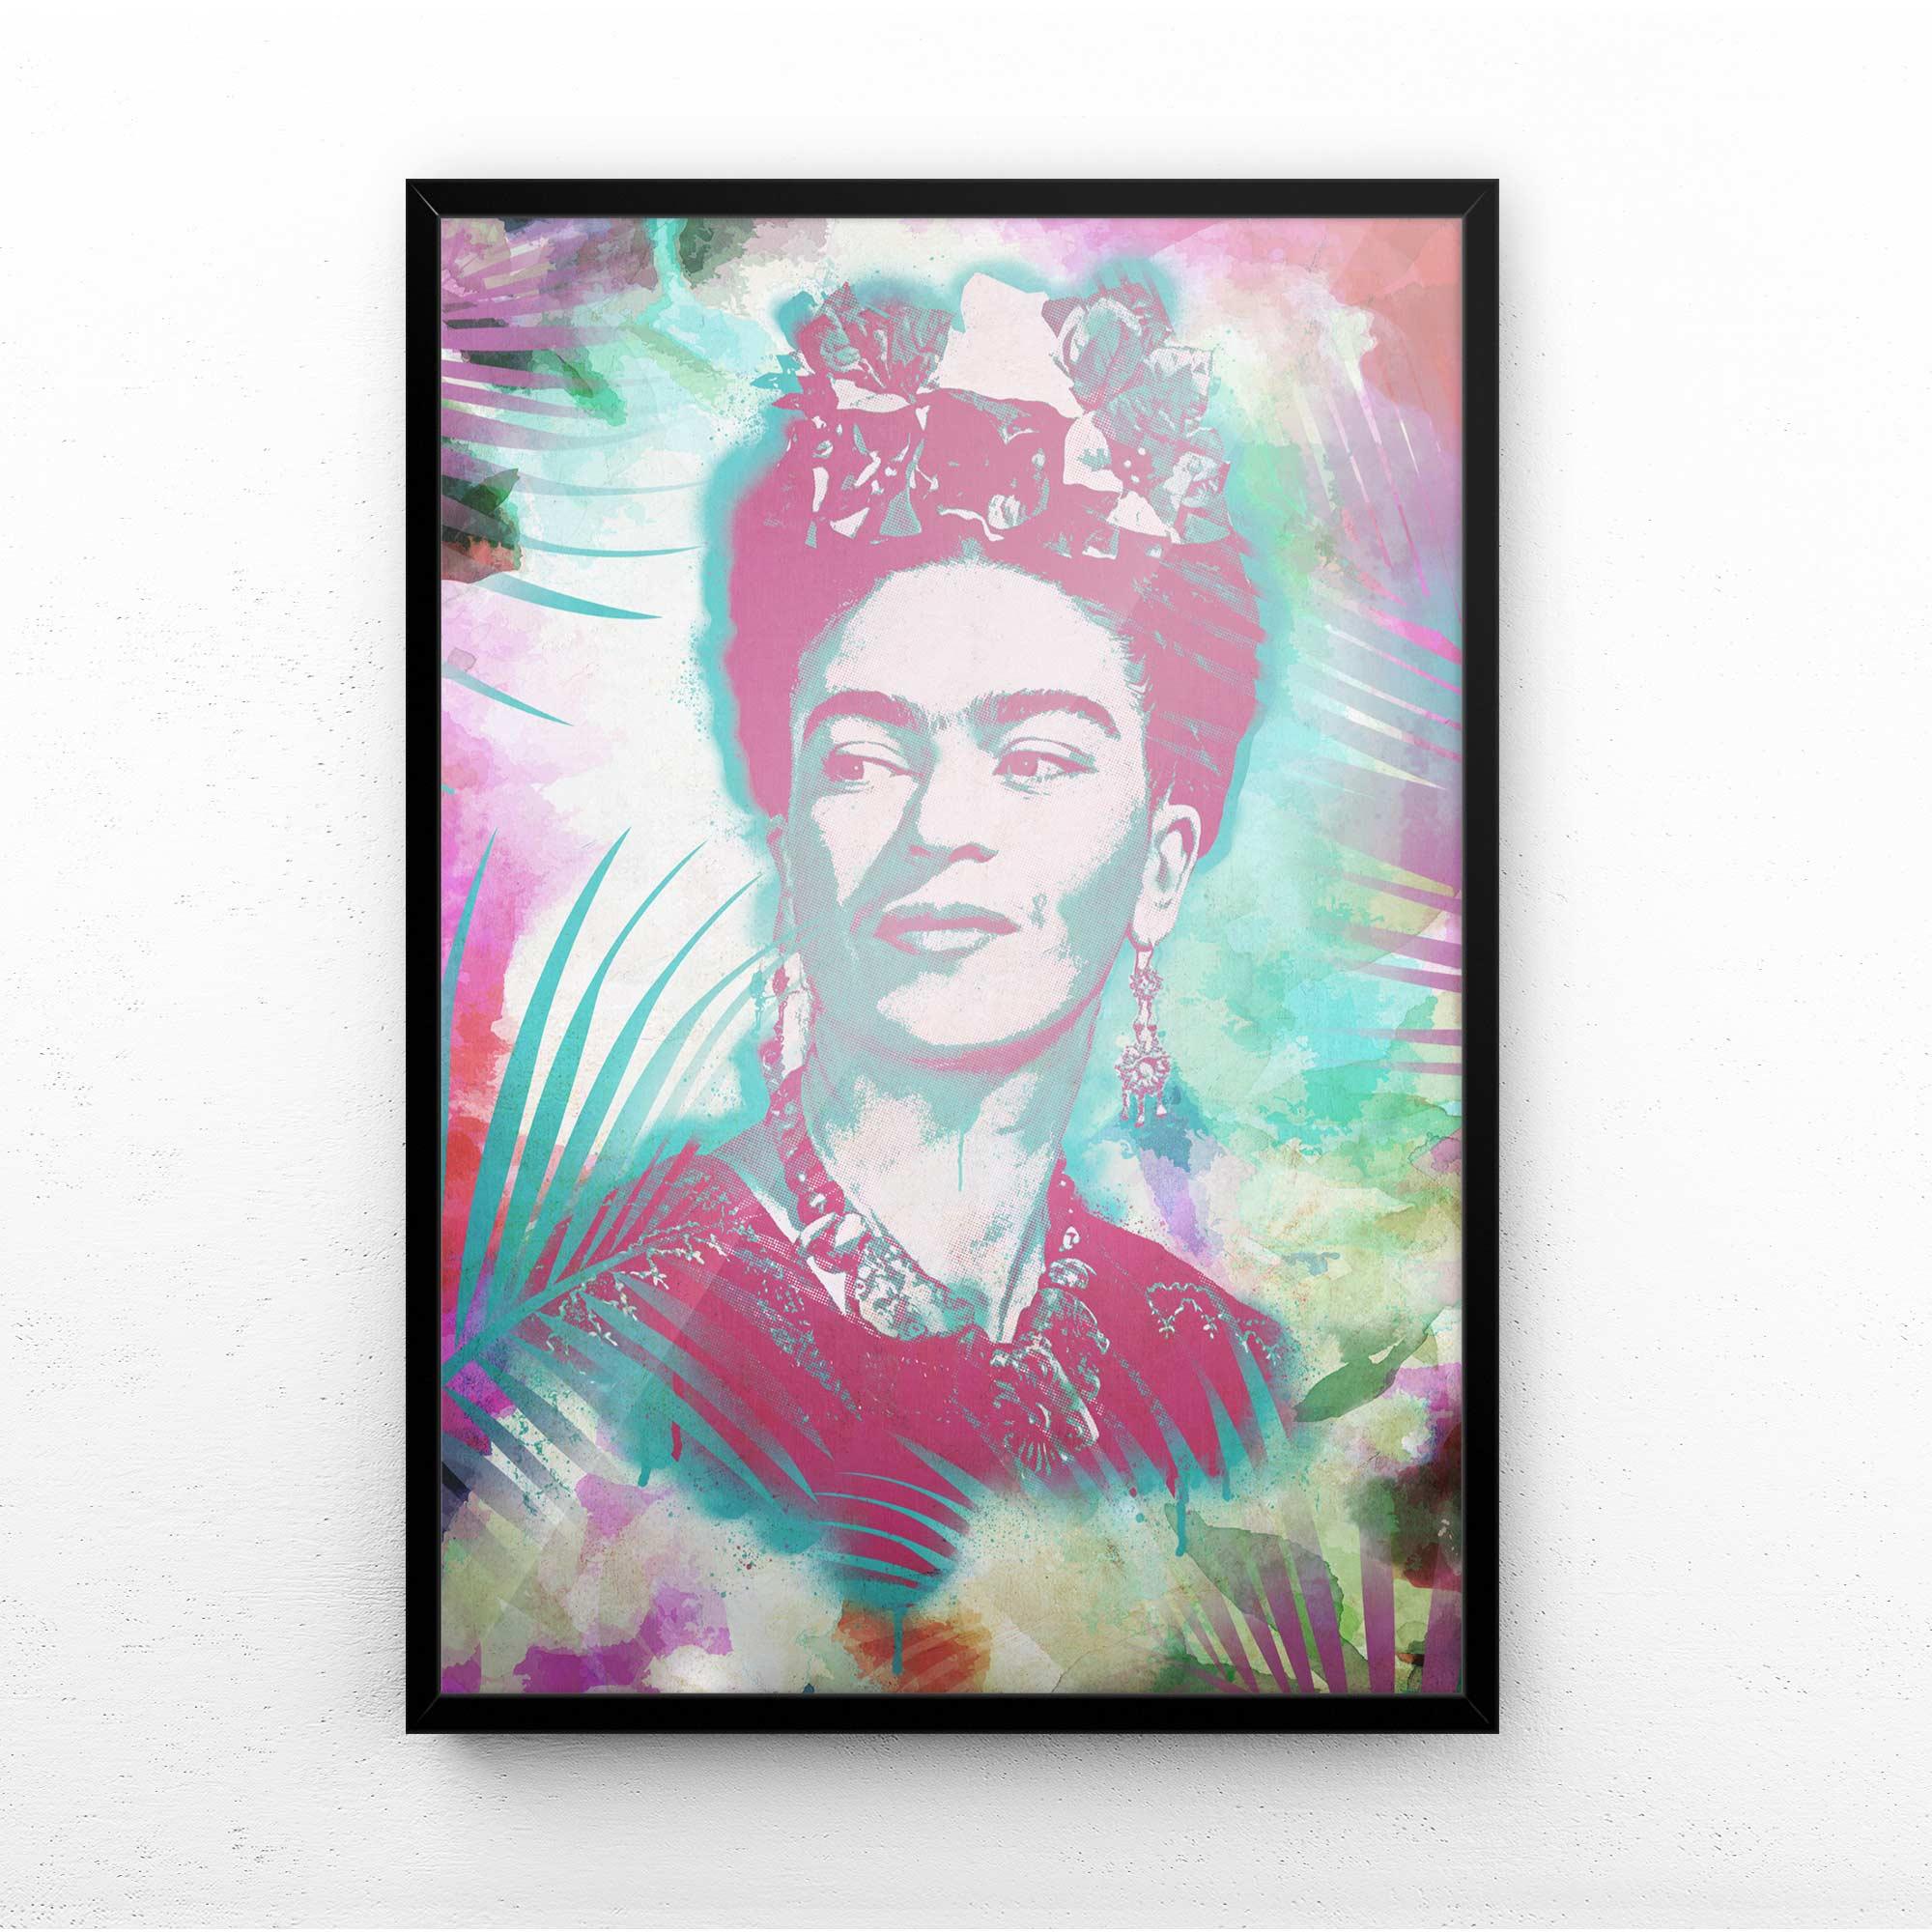 Frida Kahlo posters